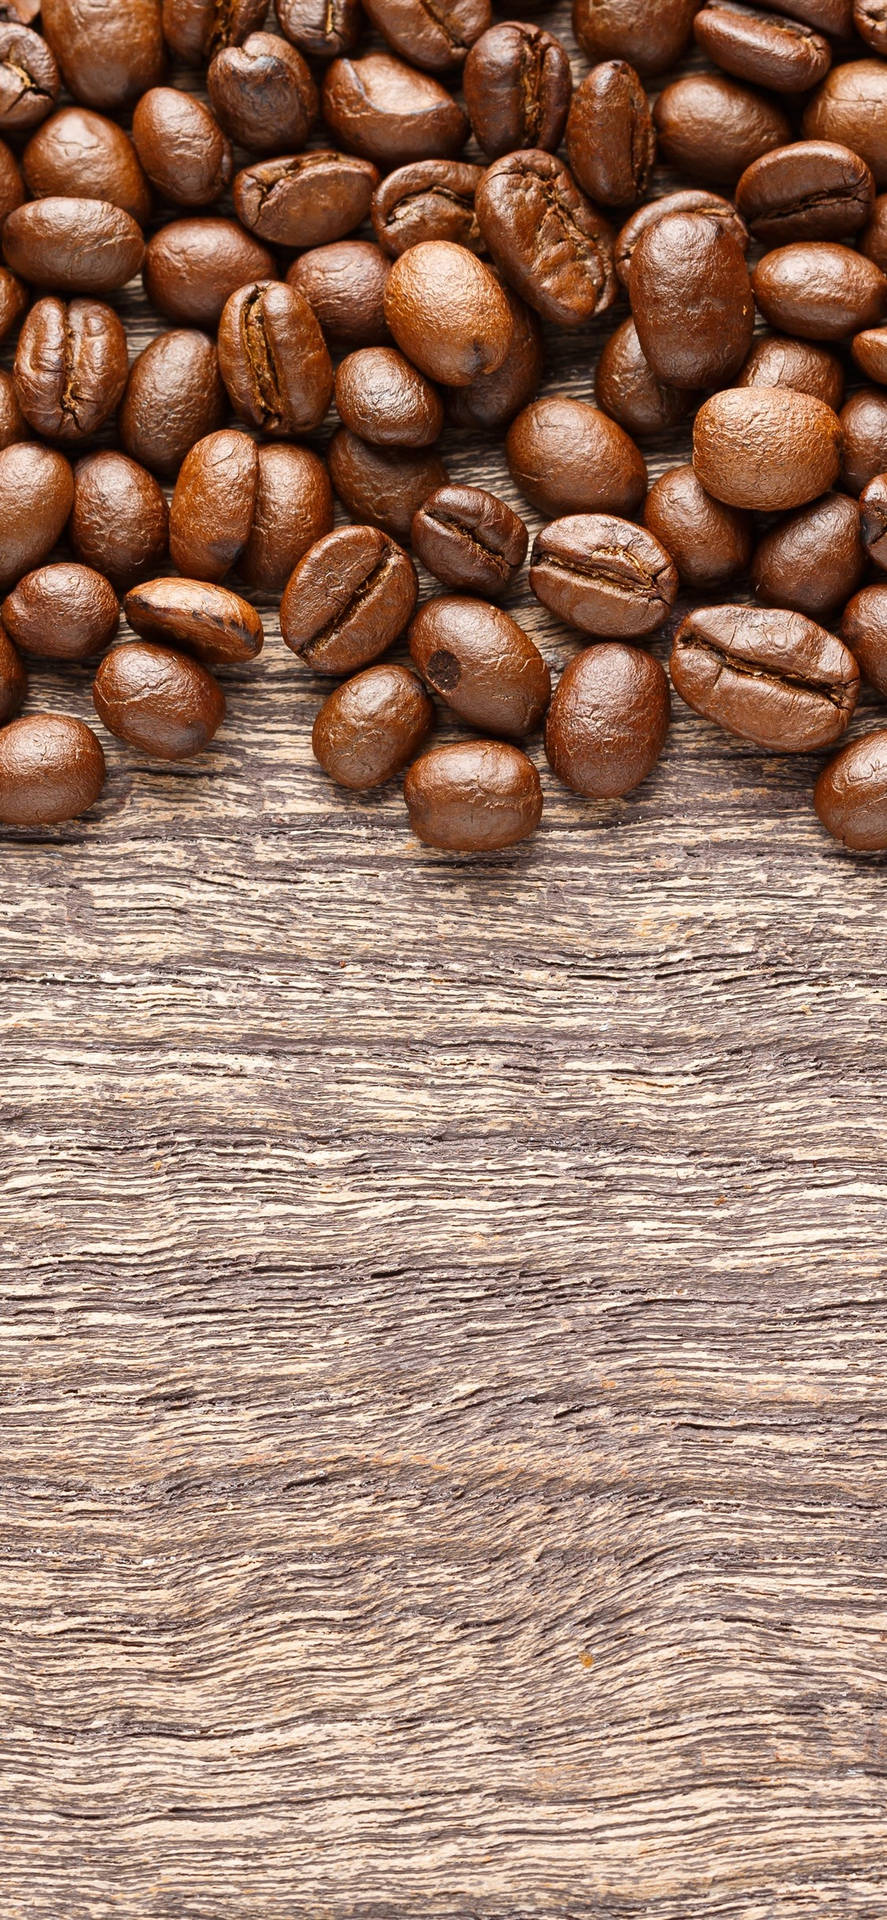 Freshly Roasted Coffee Beans Background